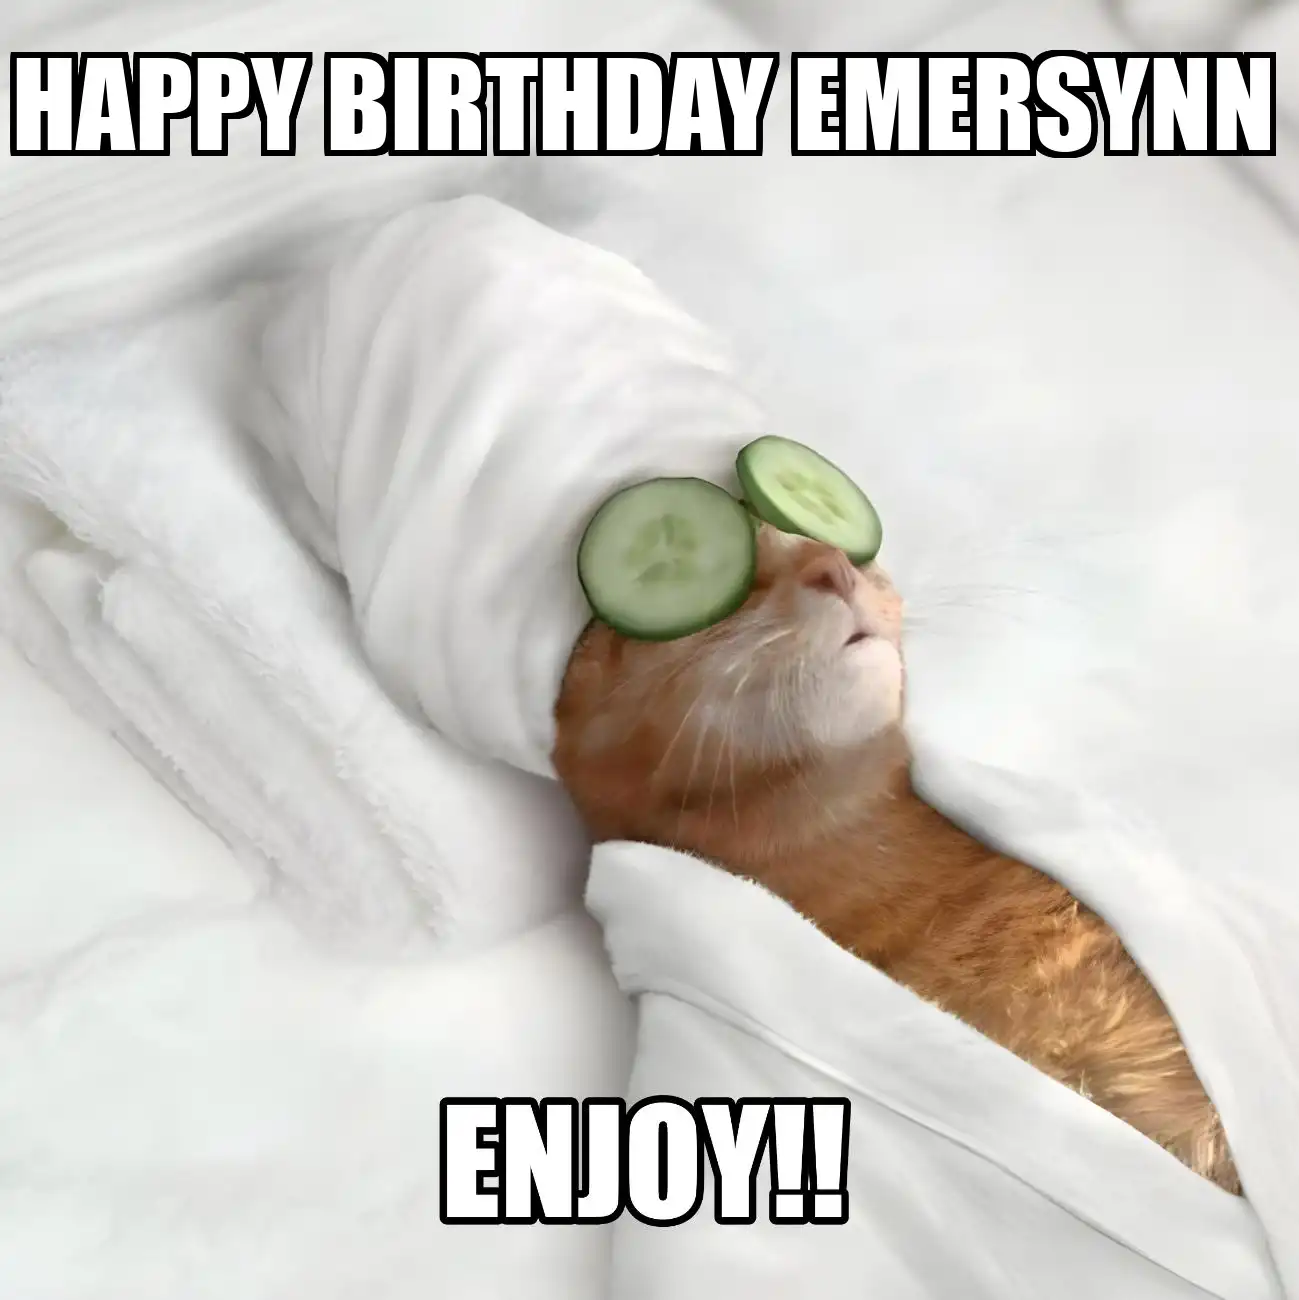 Happy Birthday Emersynn Enjoy Cat Meme